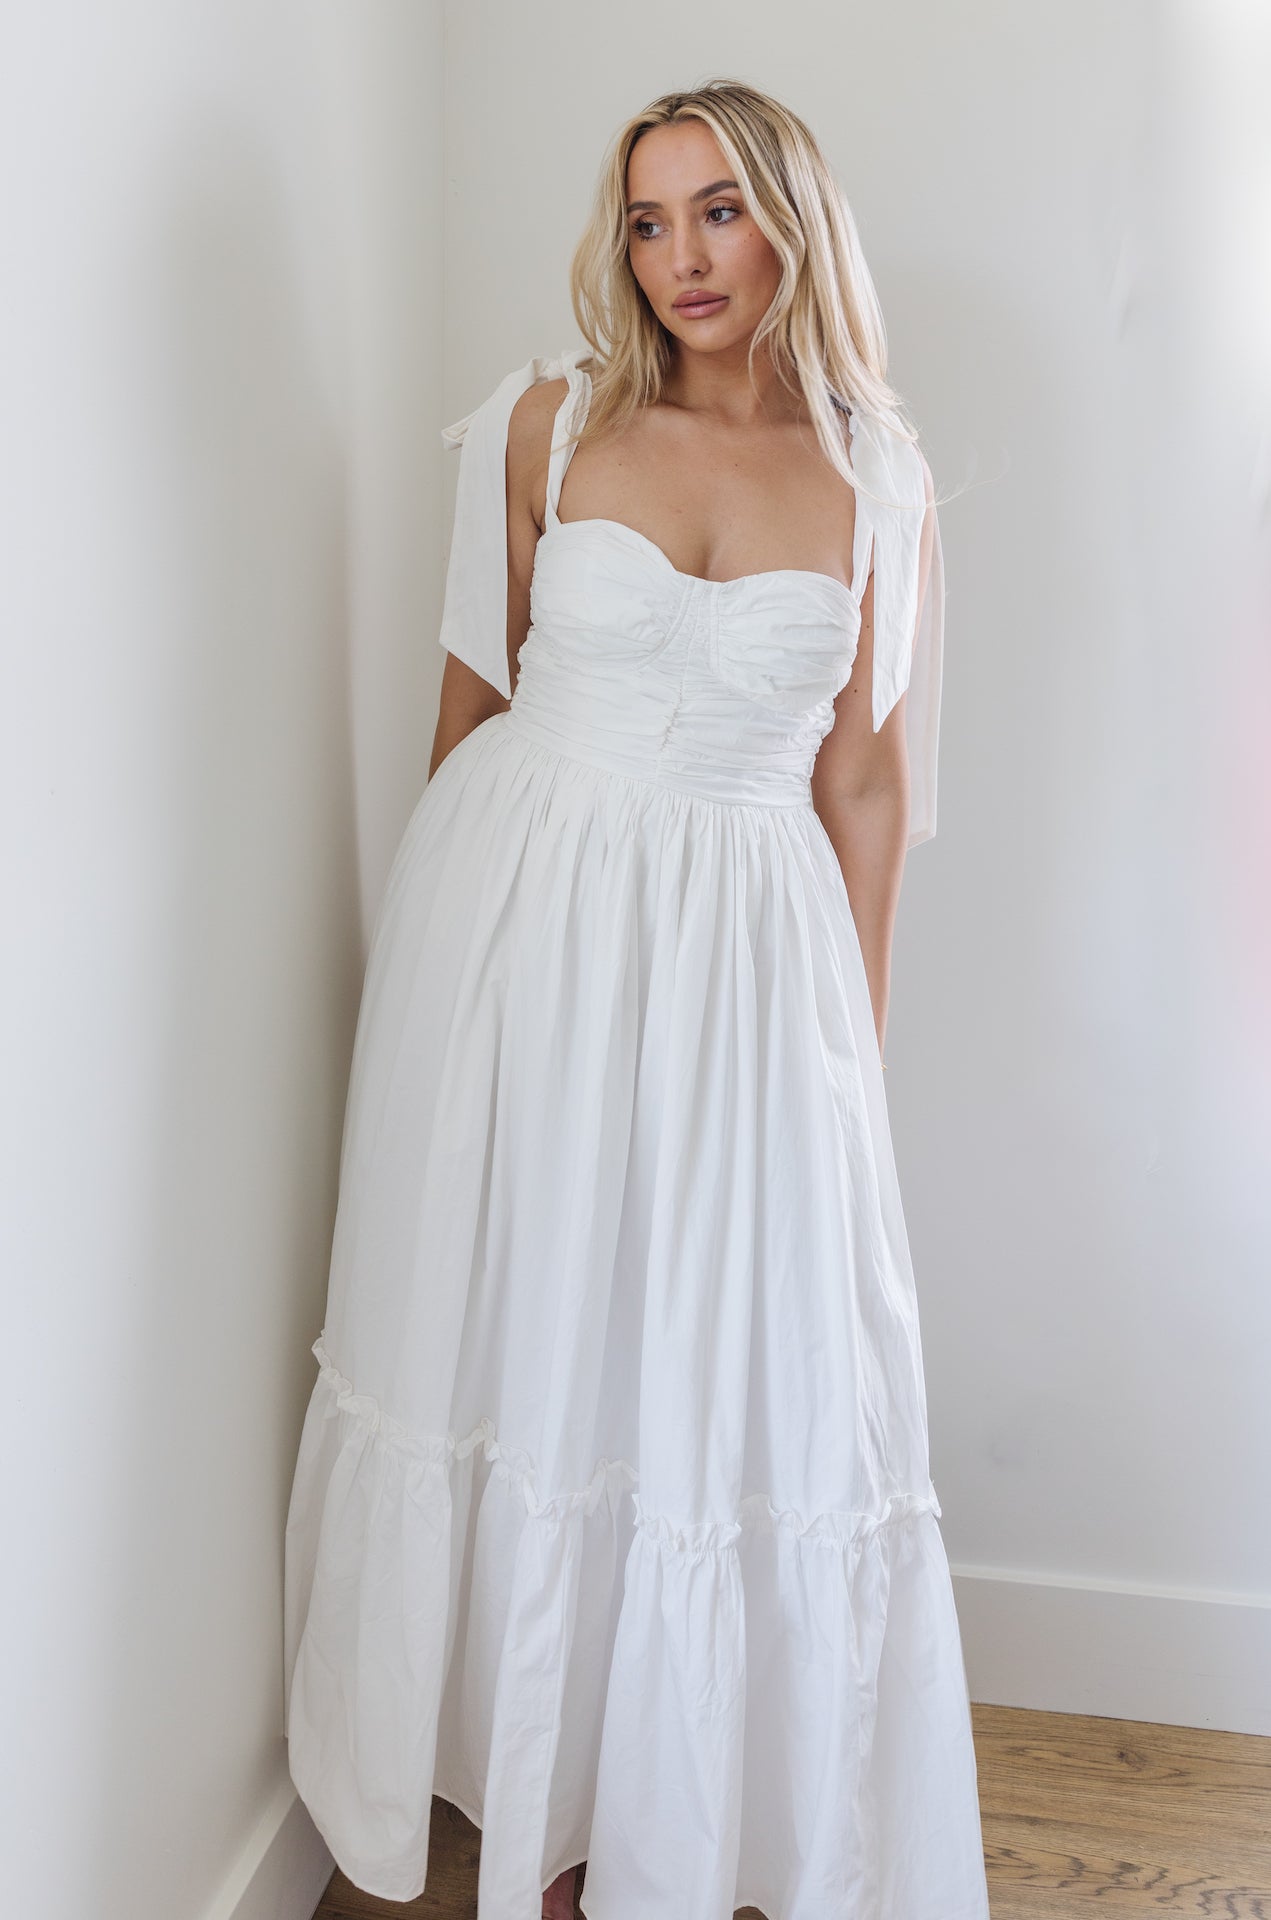 white midi poplin dress with bow on shoulders